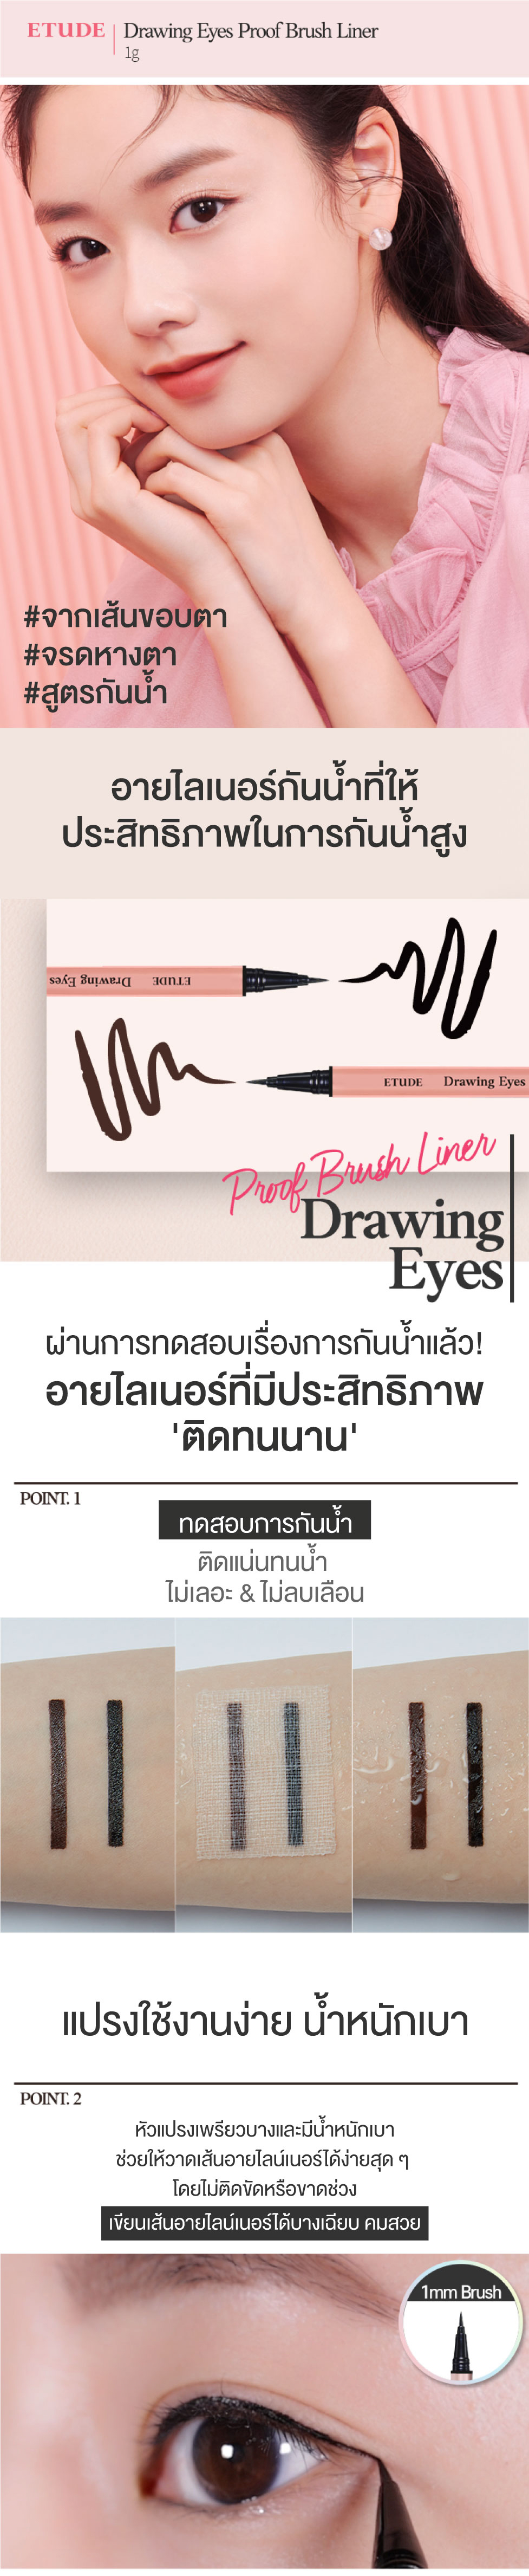 drawing_eye_proof_brush_liner_sub_TH_1